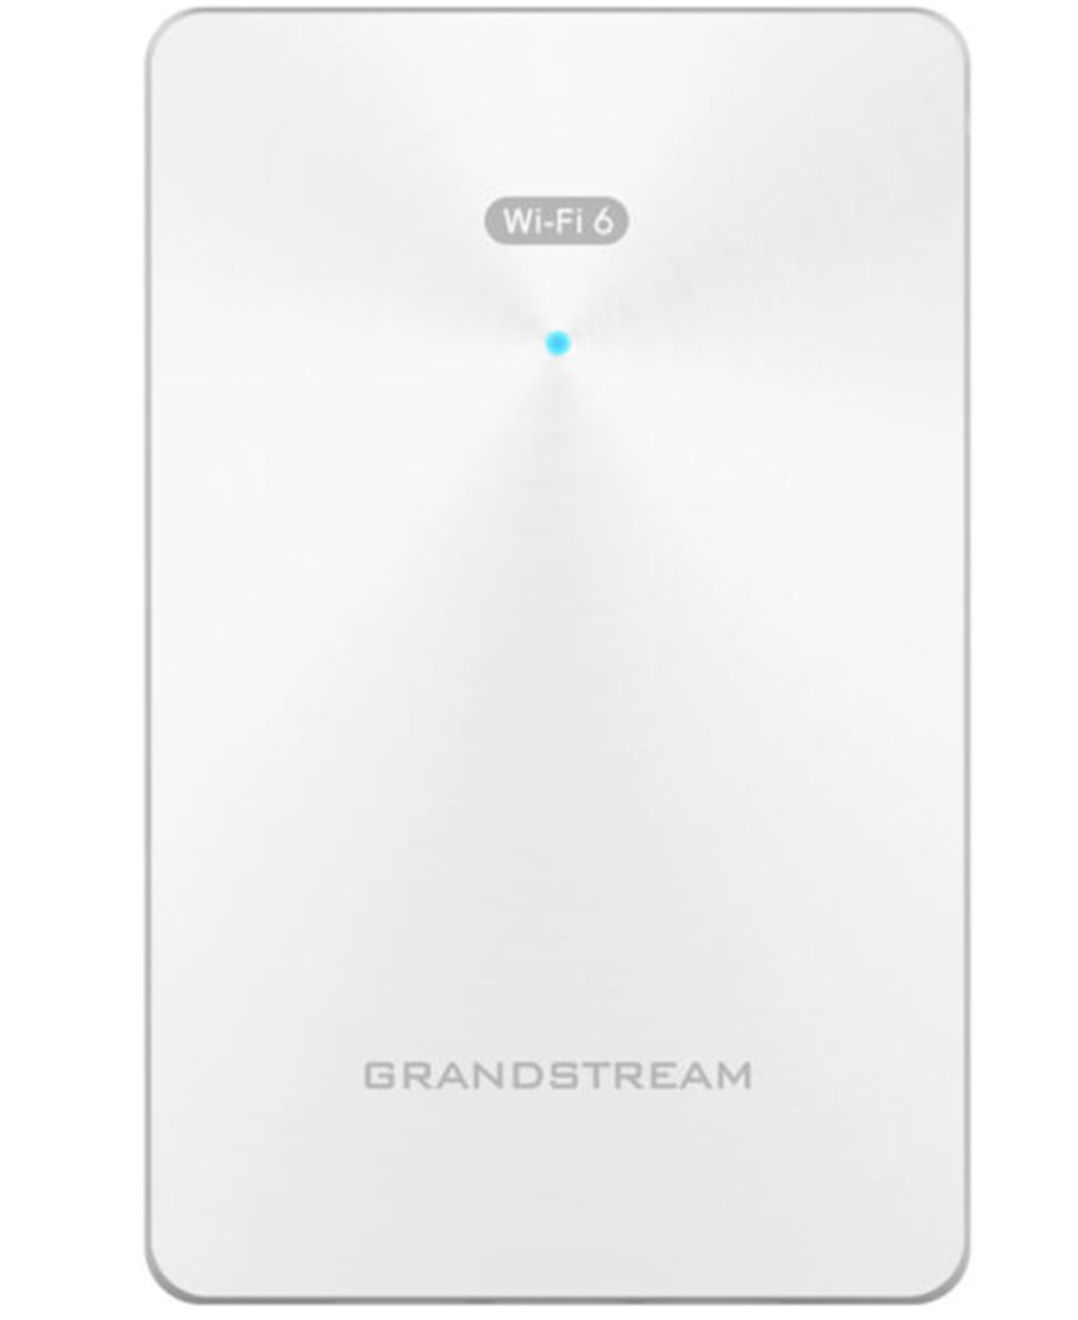 Grandstream Kit for an Apartment